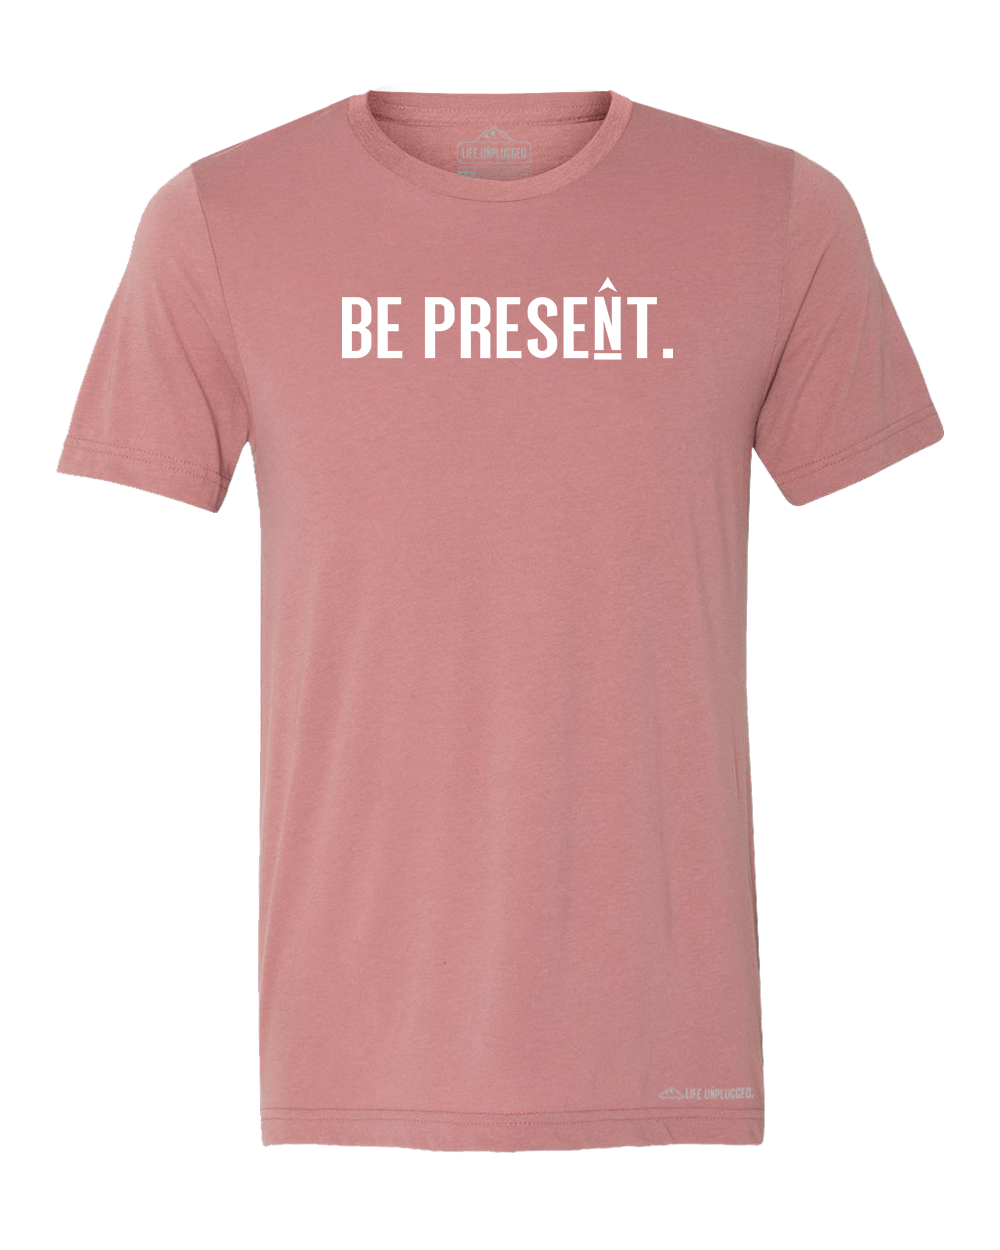 BE PRESENT. Full Chest Premium Triblend T-Shirt